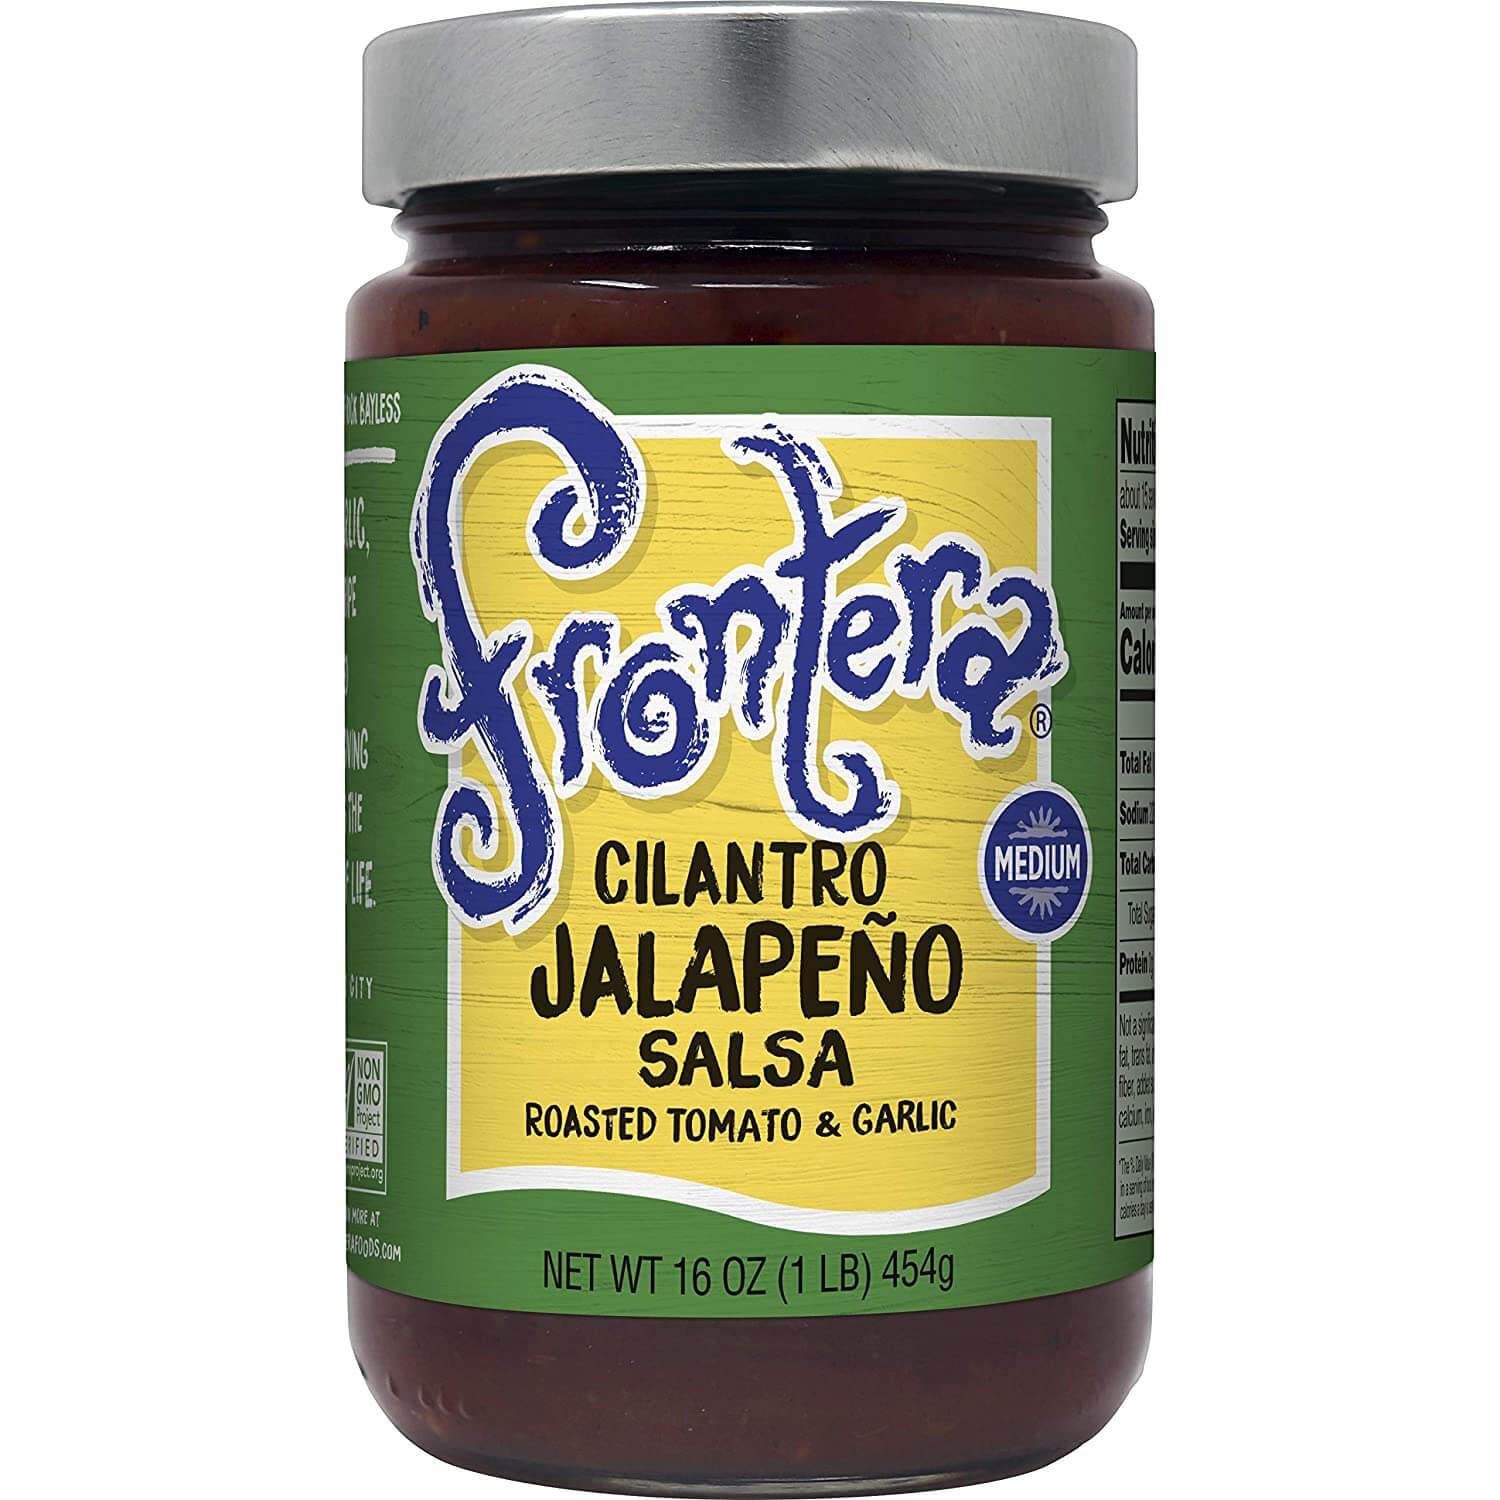 FRONTERA Gourmet Mexican Jalapeño Cilantro Salsa